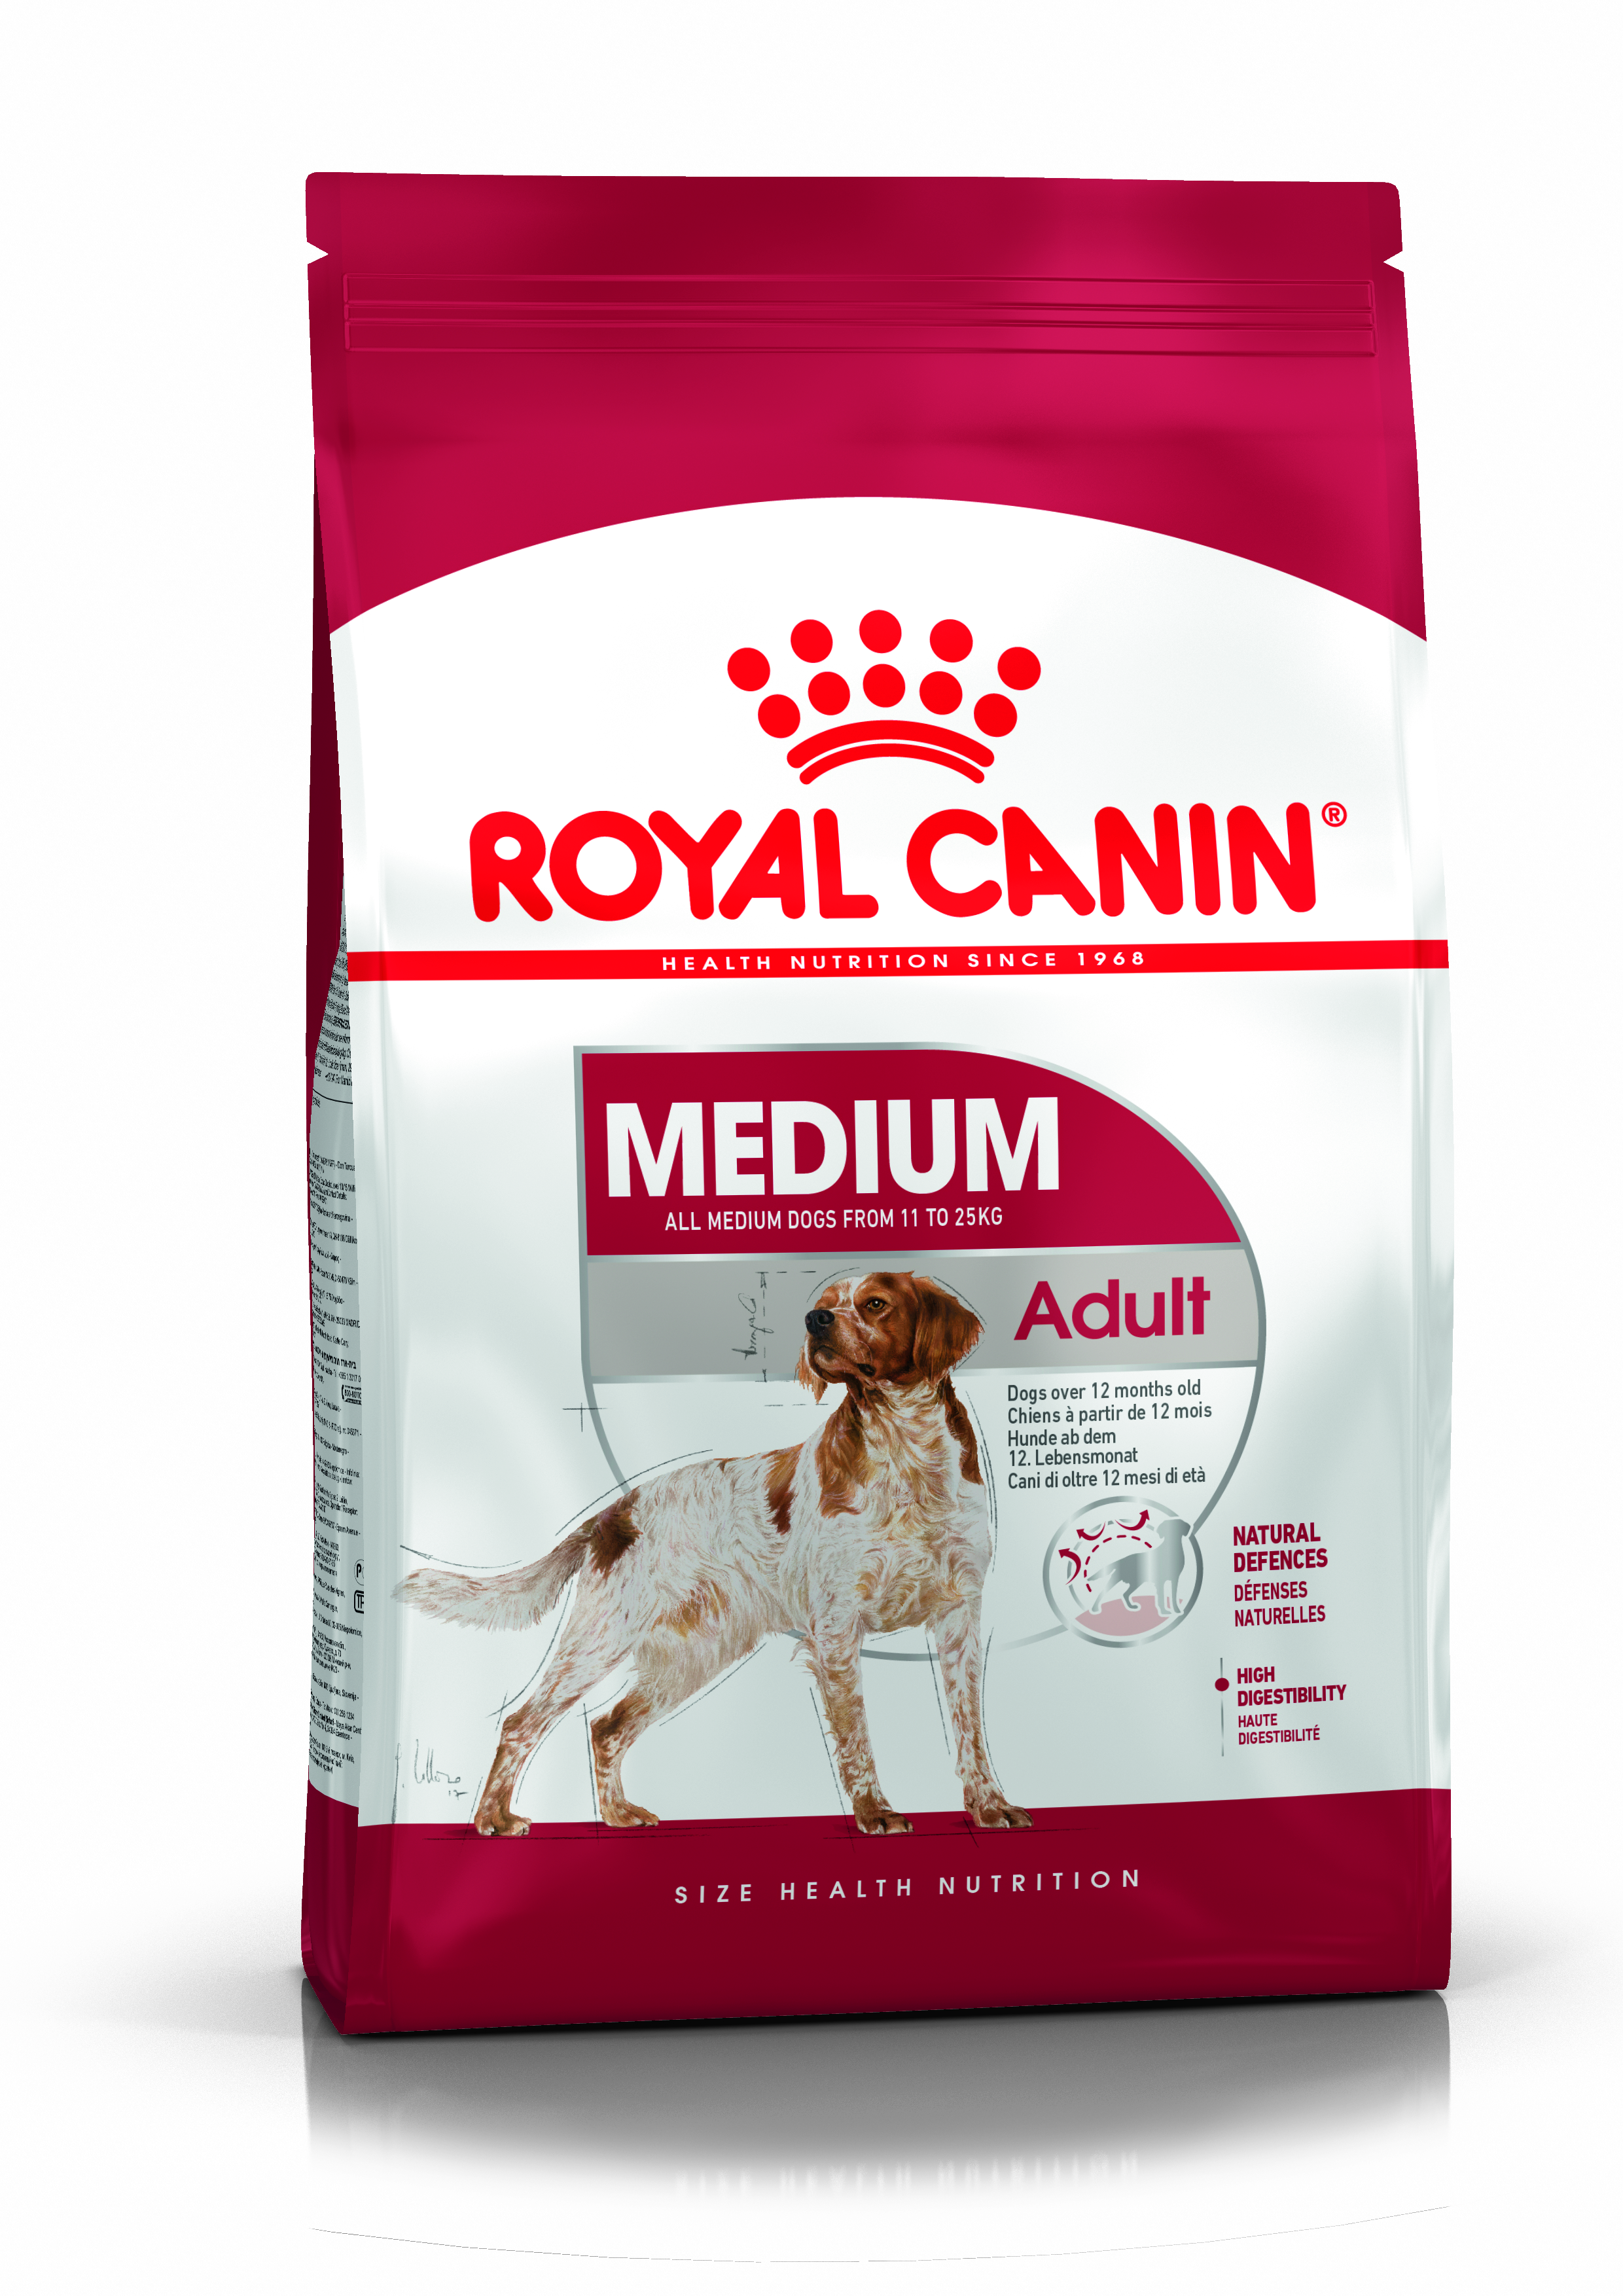 Medium Adult Kering - Royal Canin